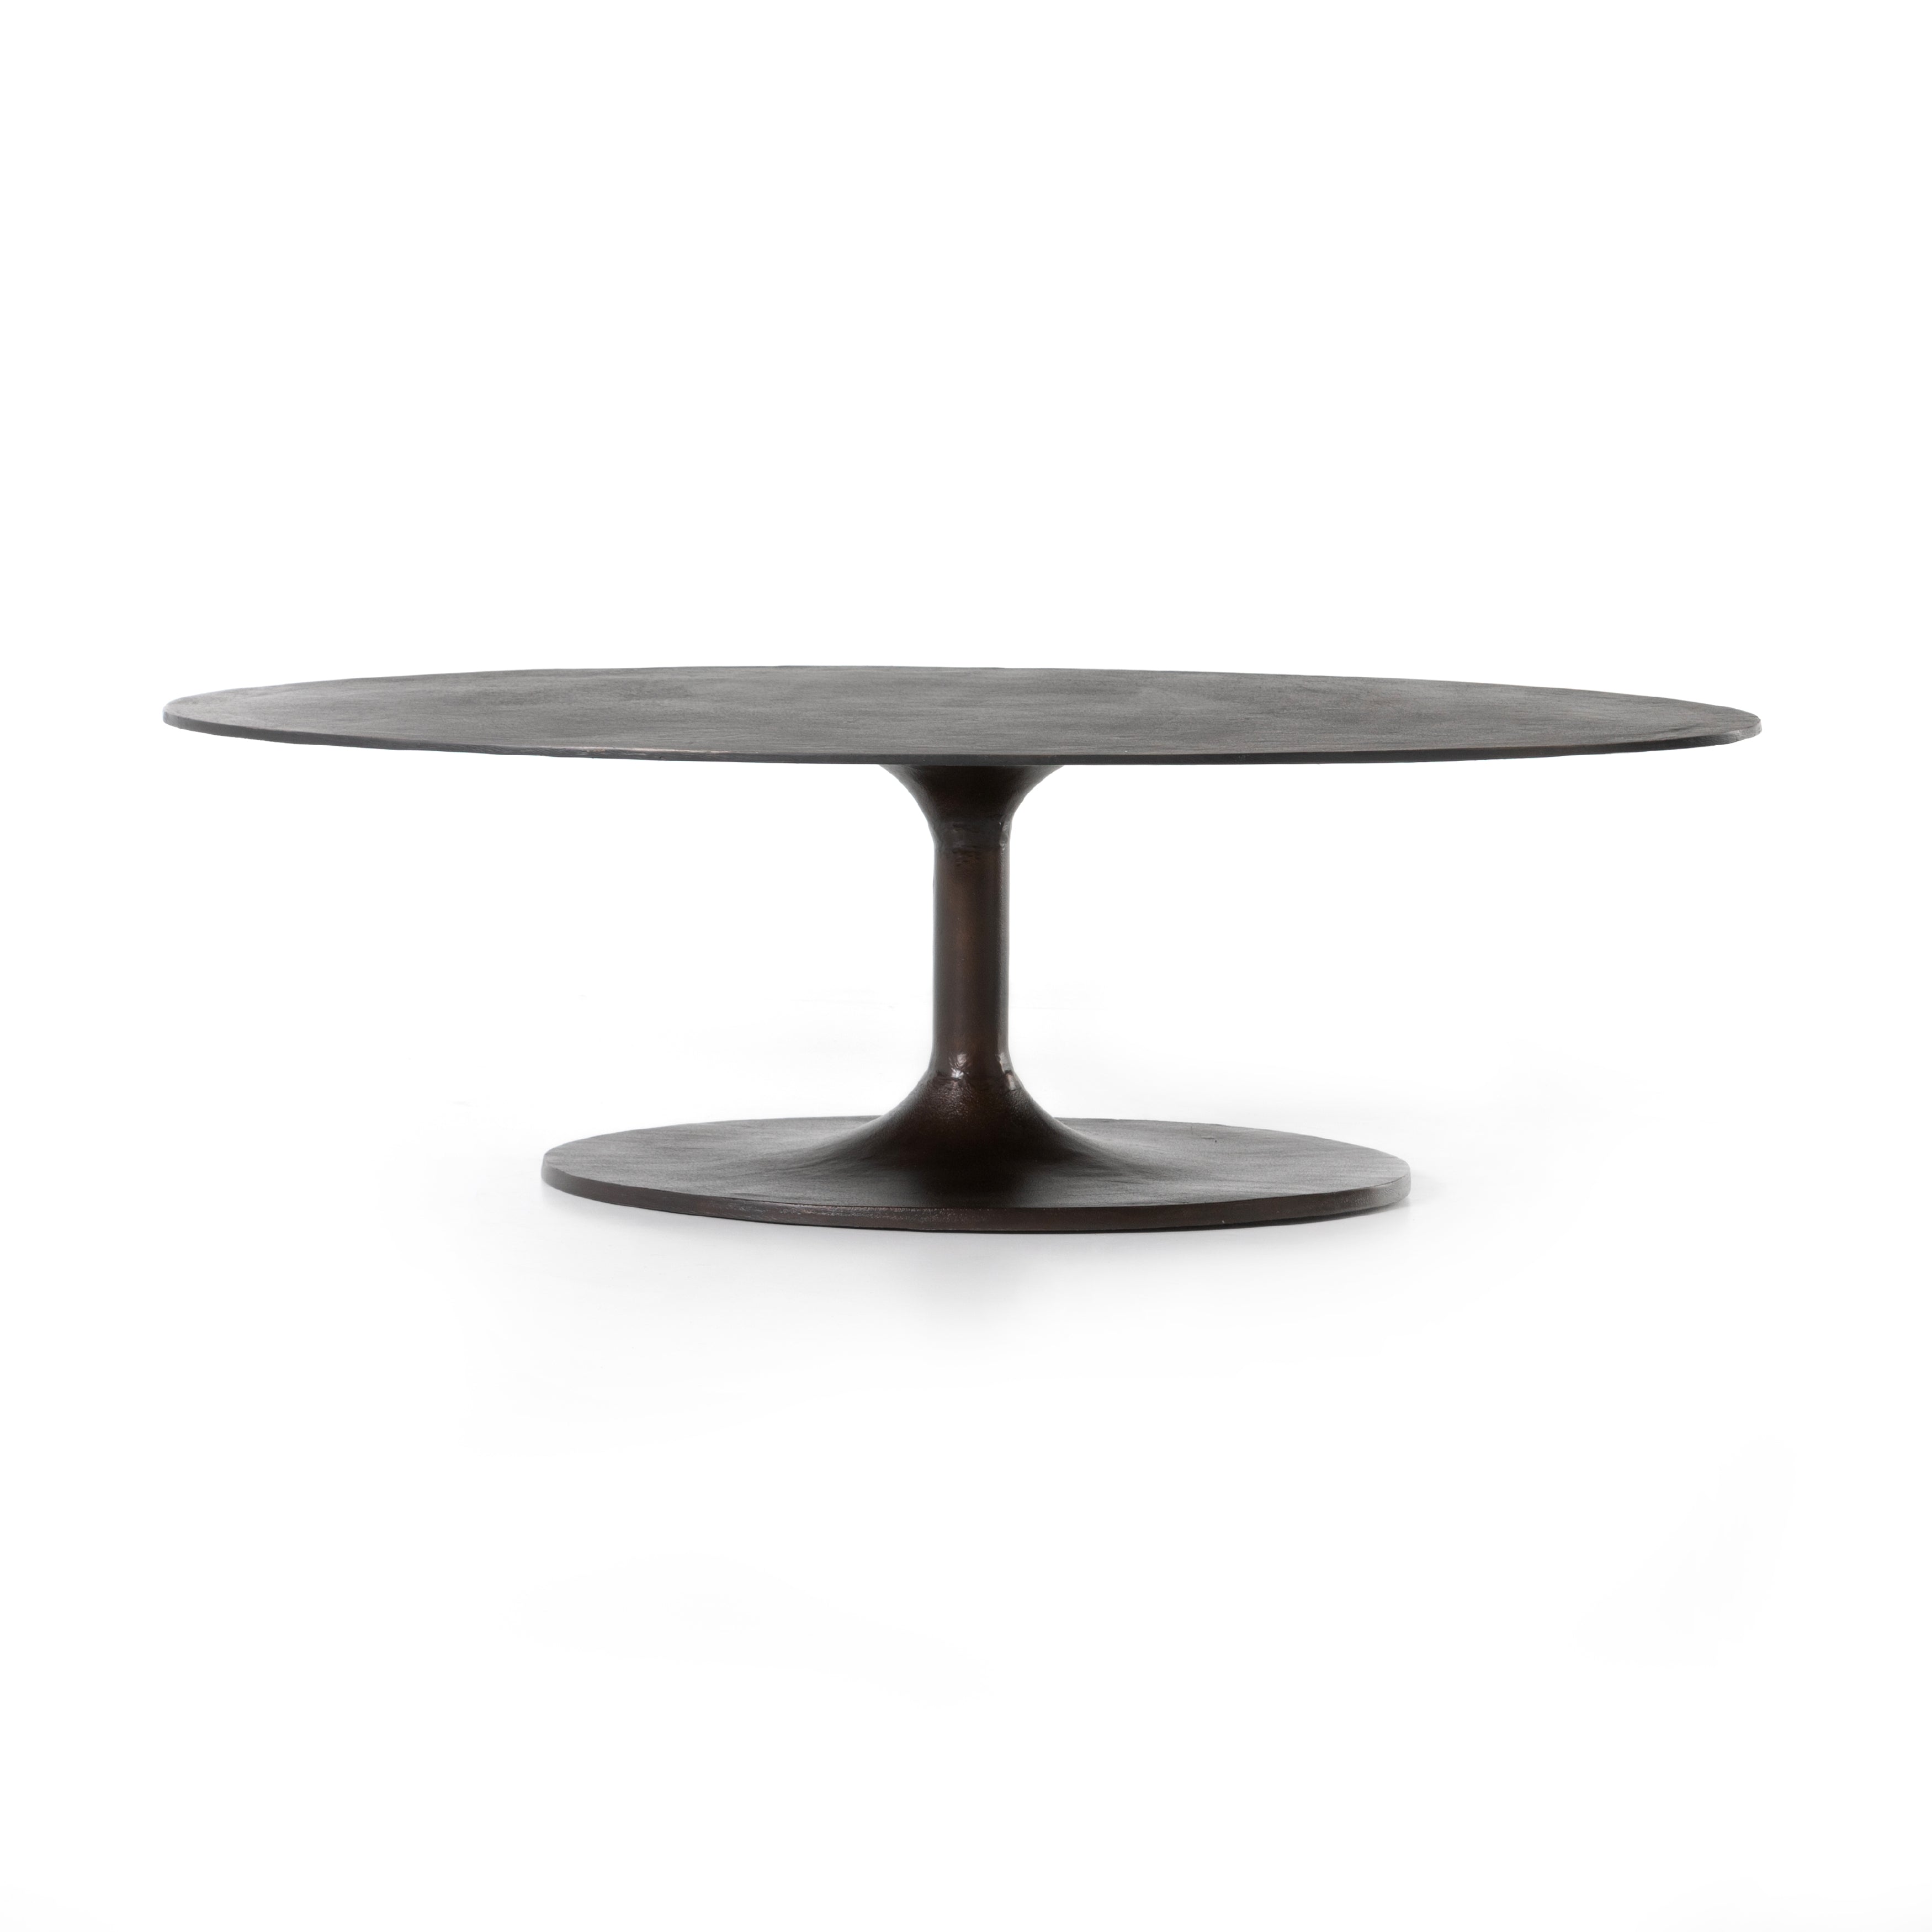 Adeline Oval Coffee Table $1249.00